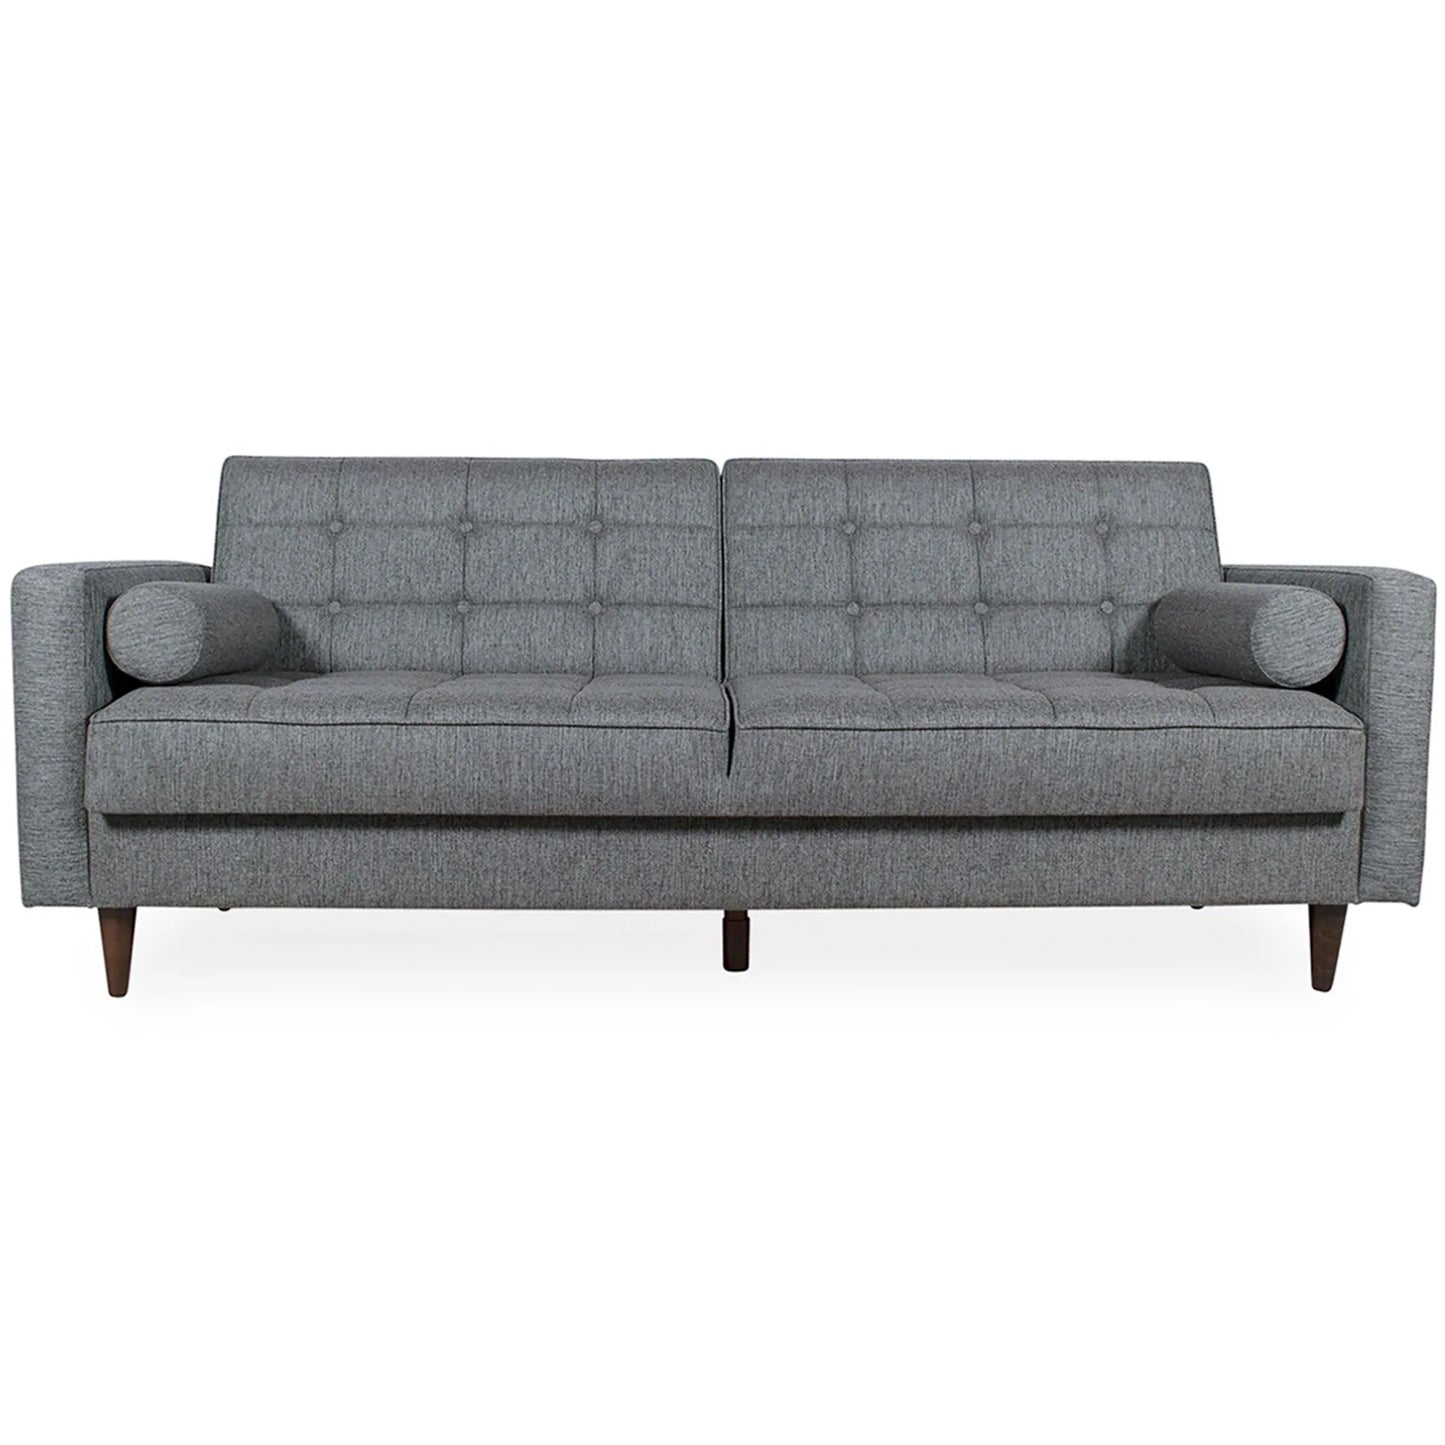 Bennet Sleeper Sofa (Gray)